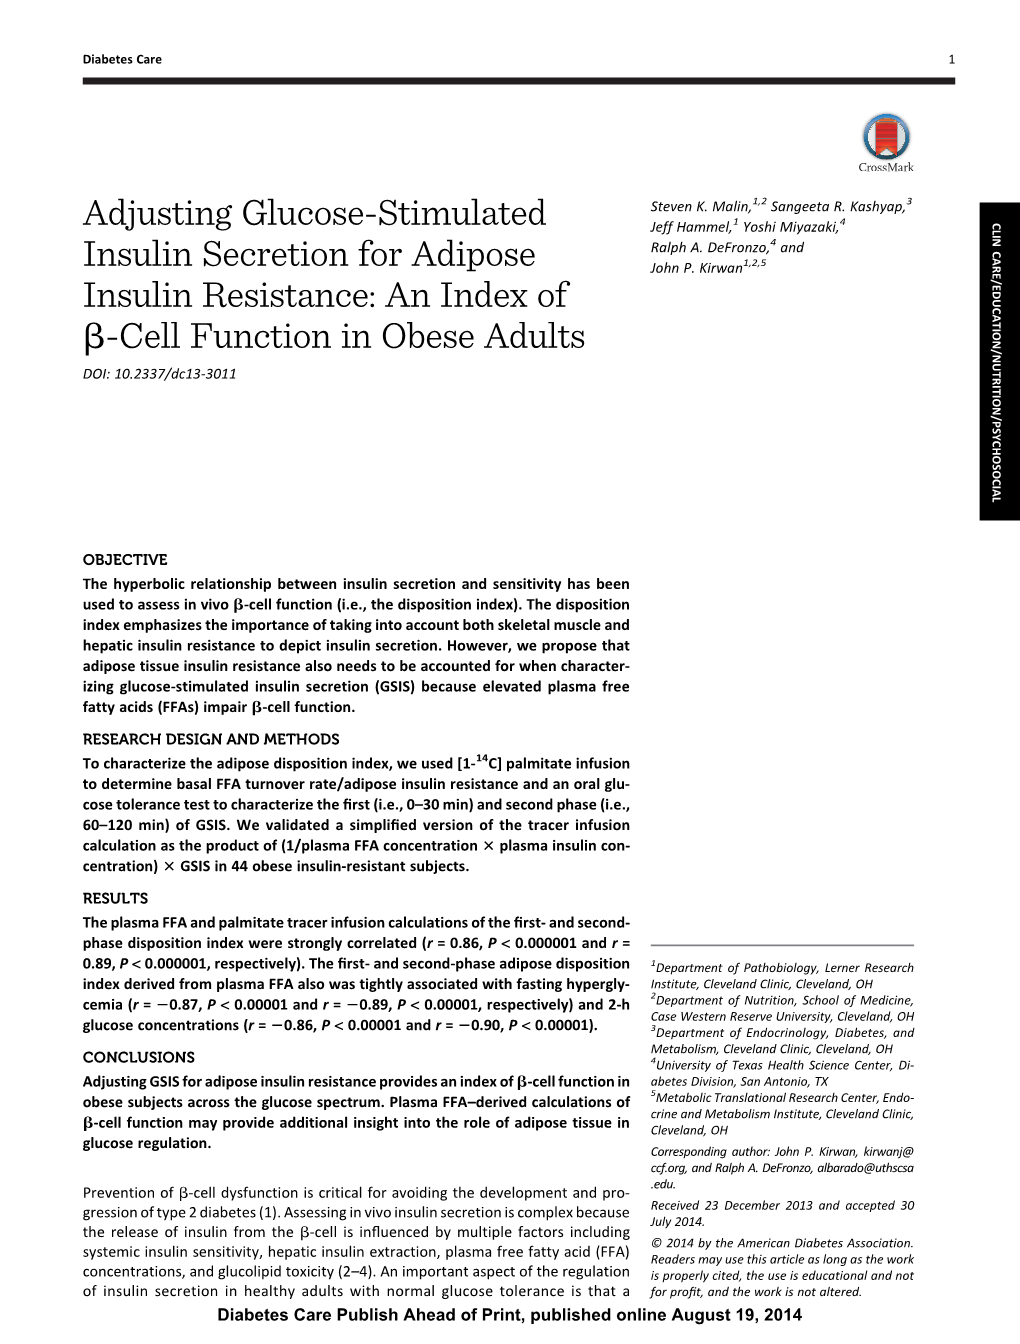 Adjusting Glucose-Stimulated Insulin Secretion for Adipose Insulin